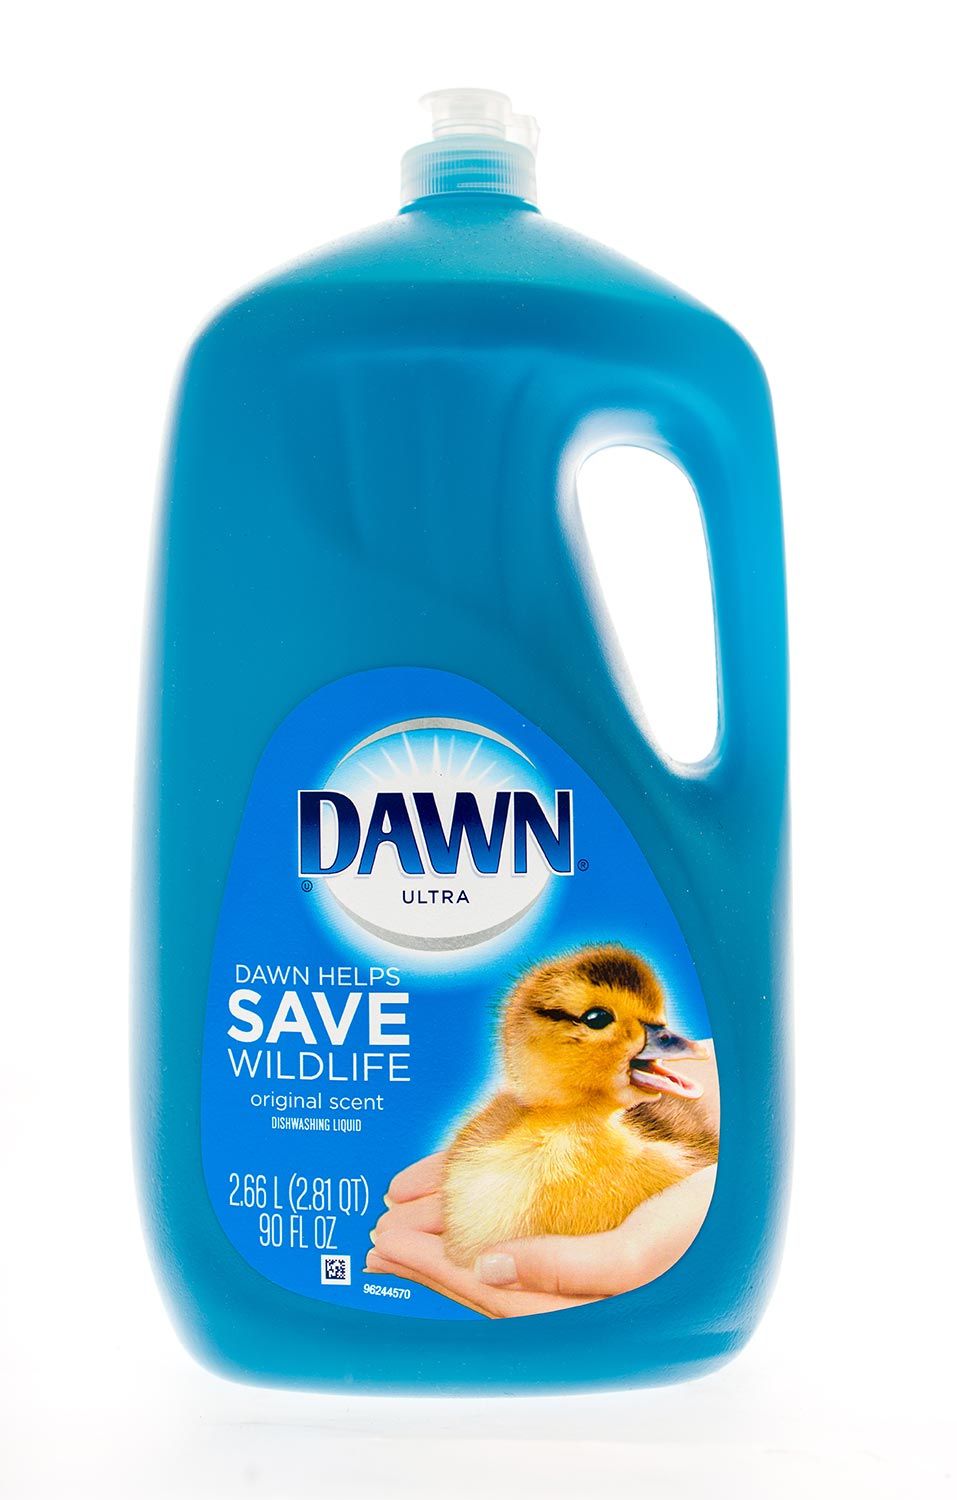 Dawn Ultra dishwashing soap